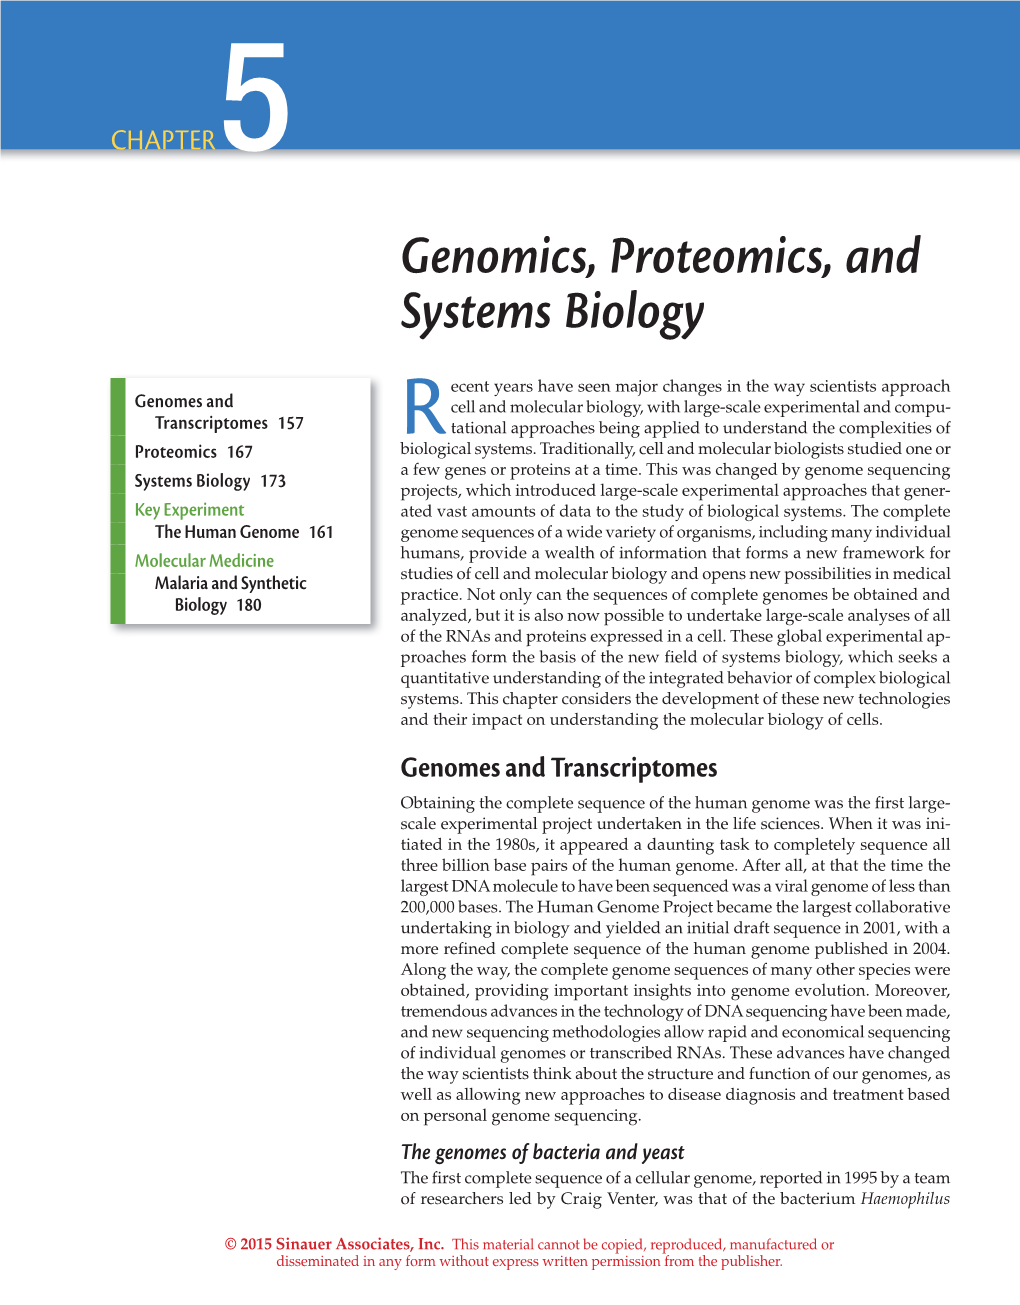 Genomics, Proteomics, and Systems Biology